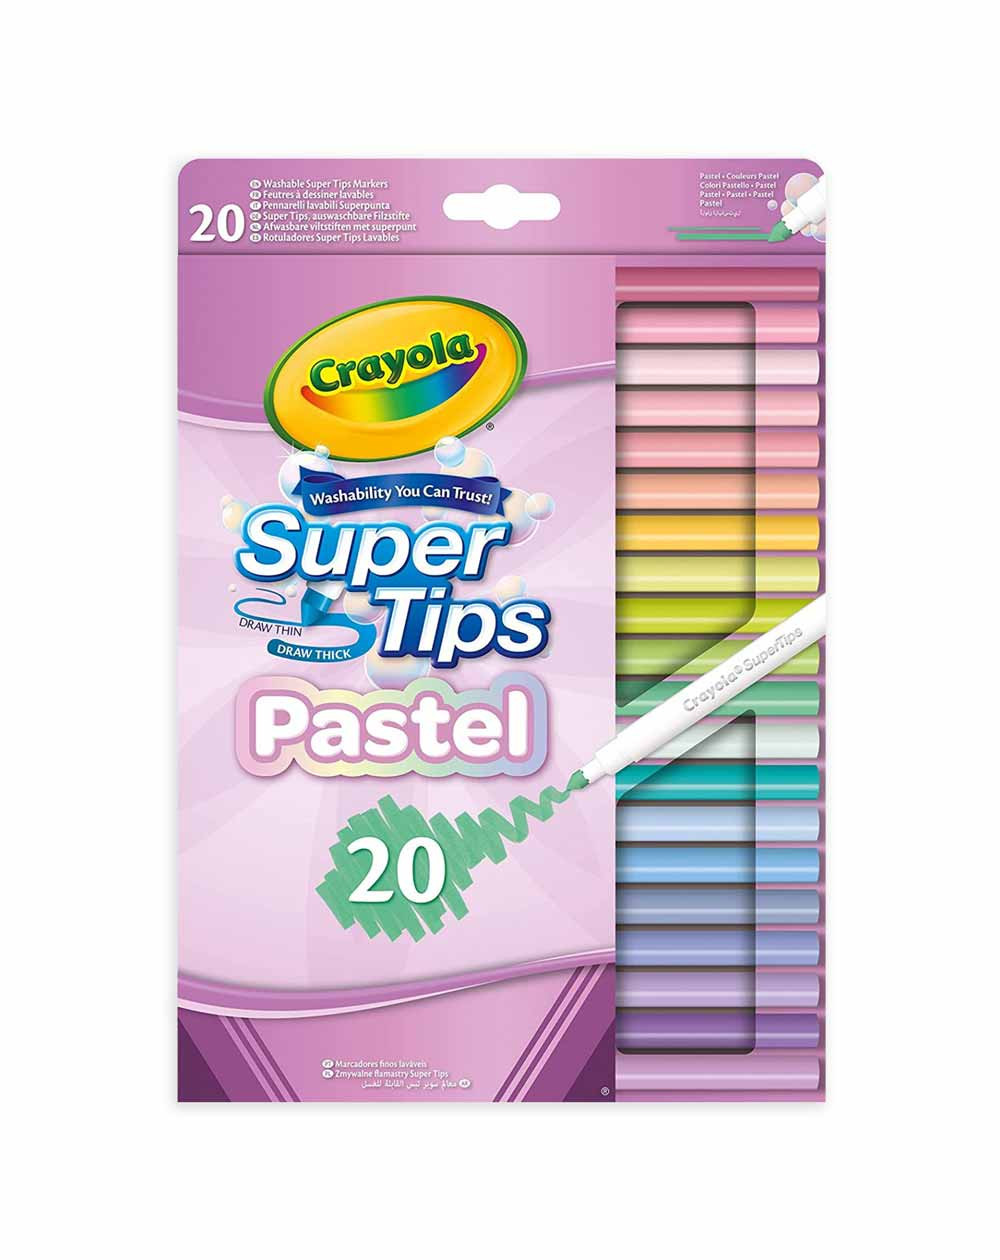 Crayola Pastel Supertips Washable Markers 20pc - School supplies - Agapics